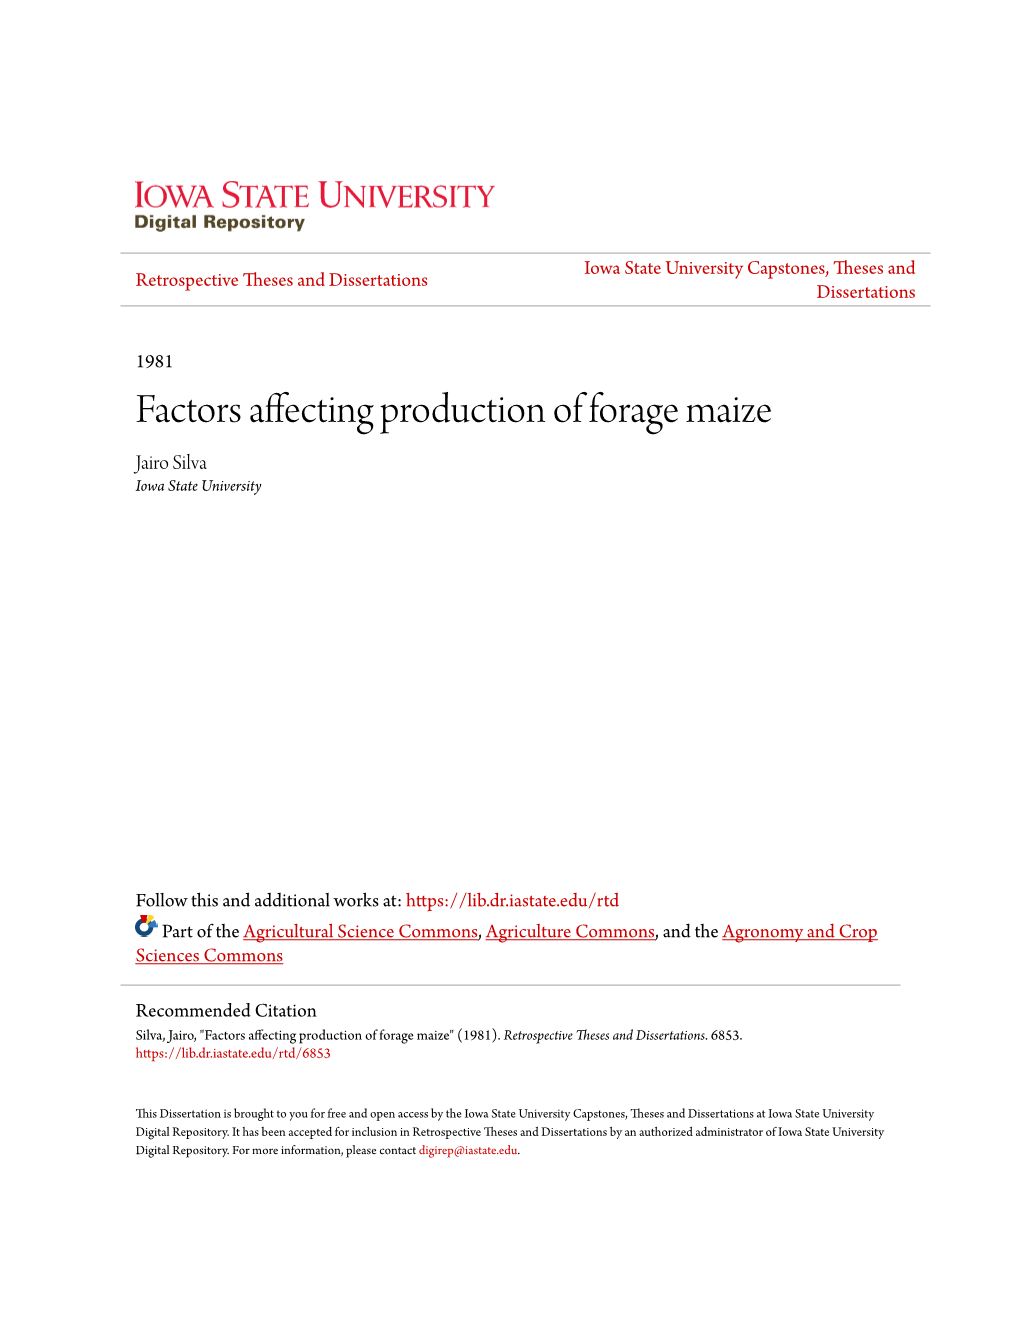 Factors Affecting Production of Forage Maize Jairo Silva Iowa State University